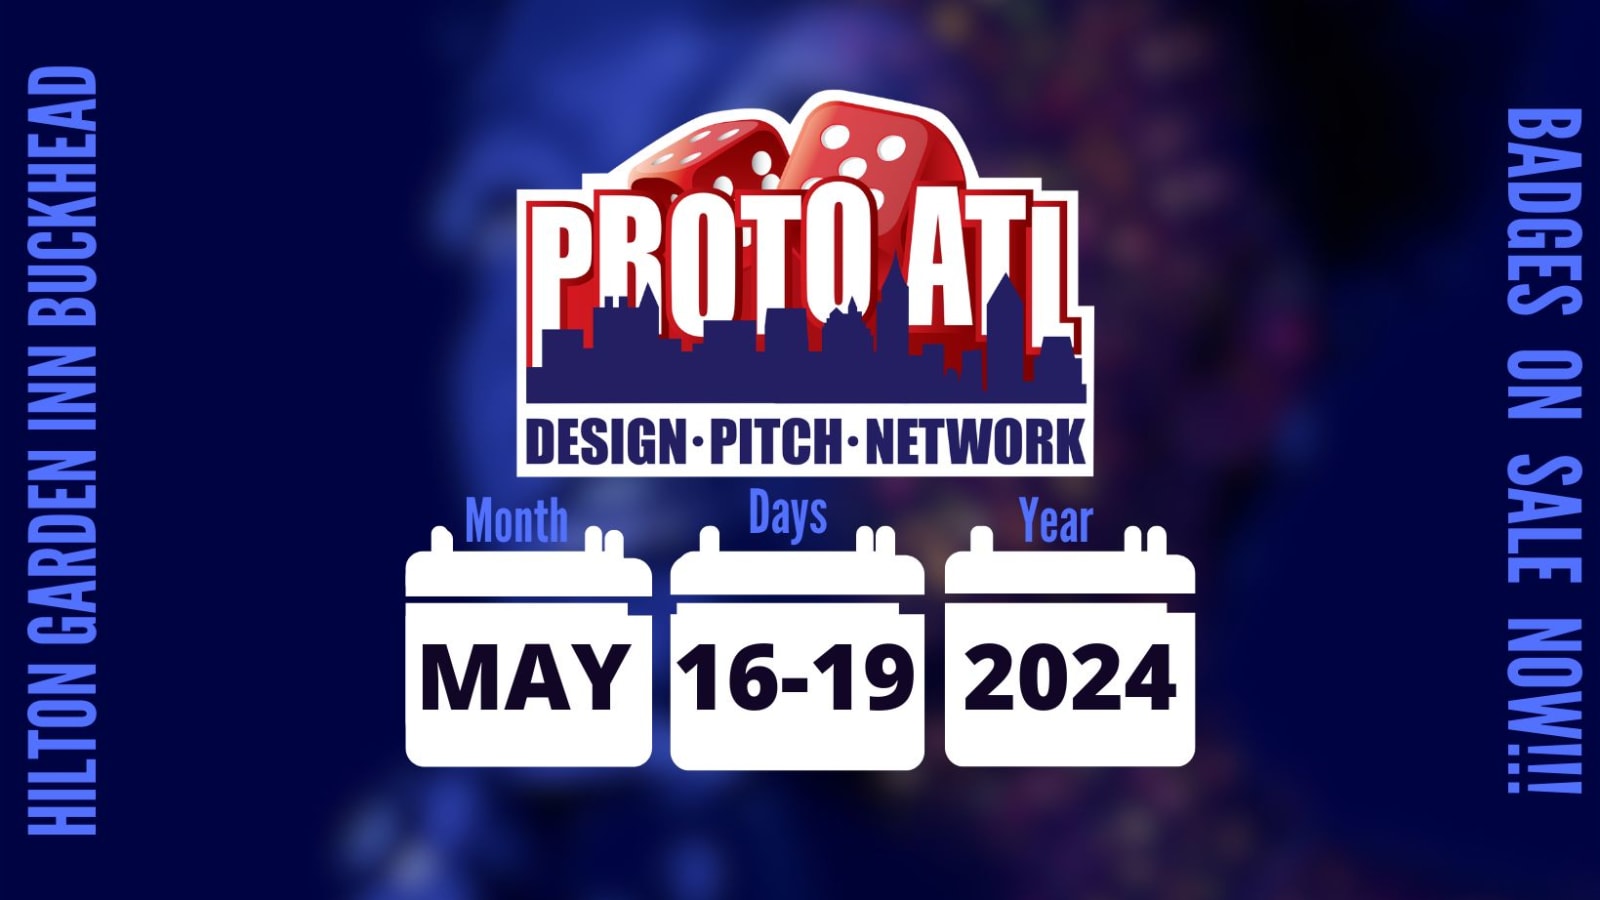 Proto ATL (board game prototype convention)